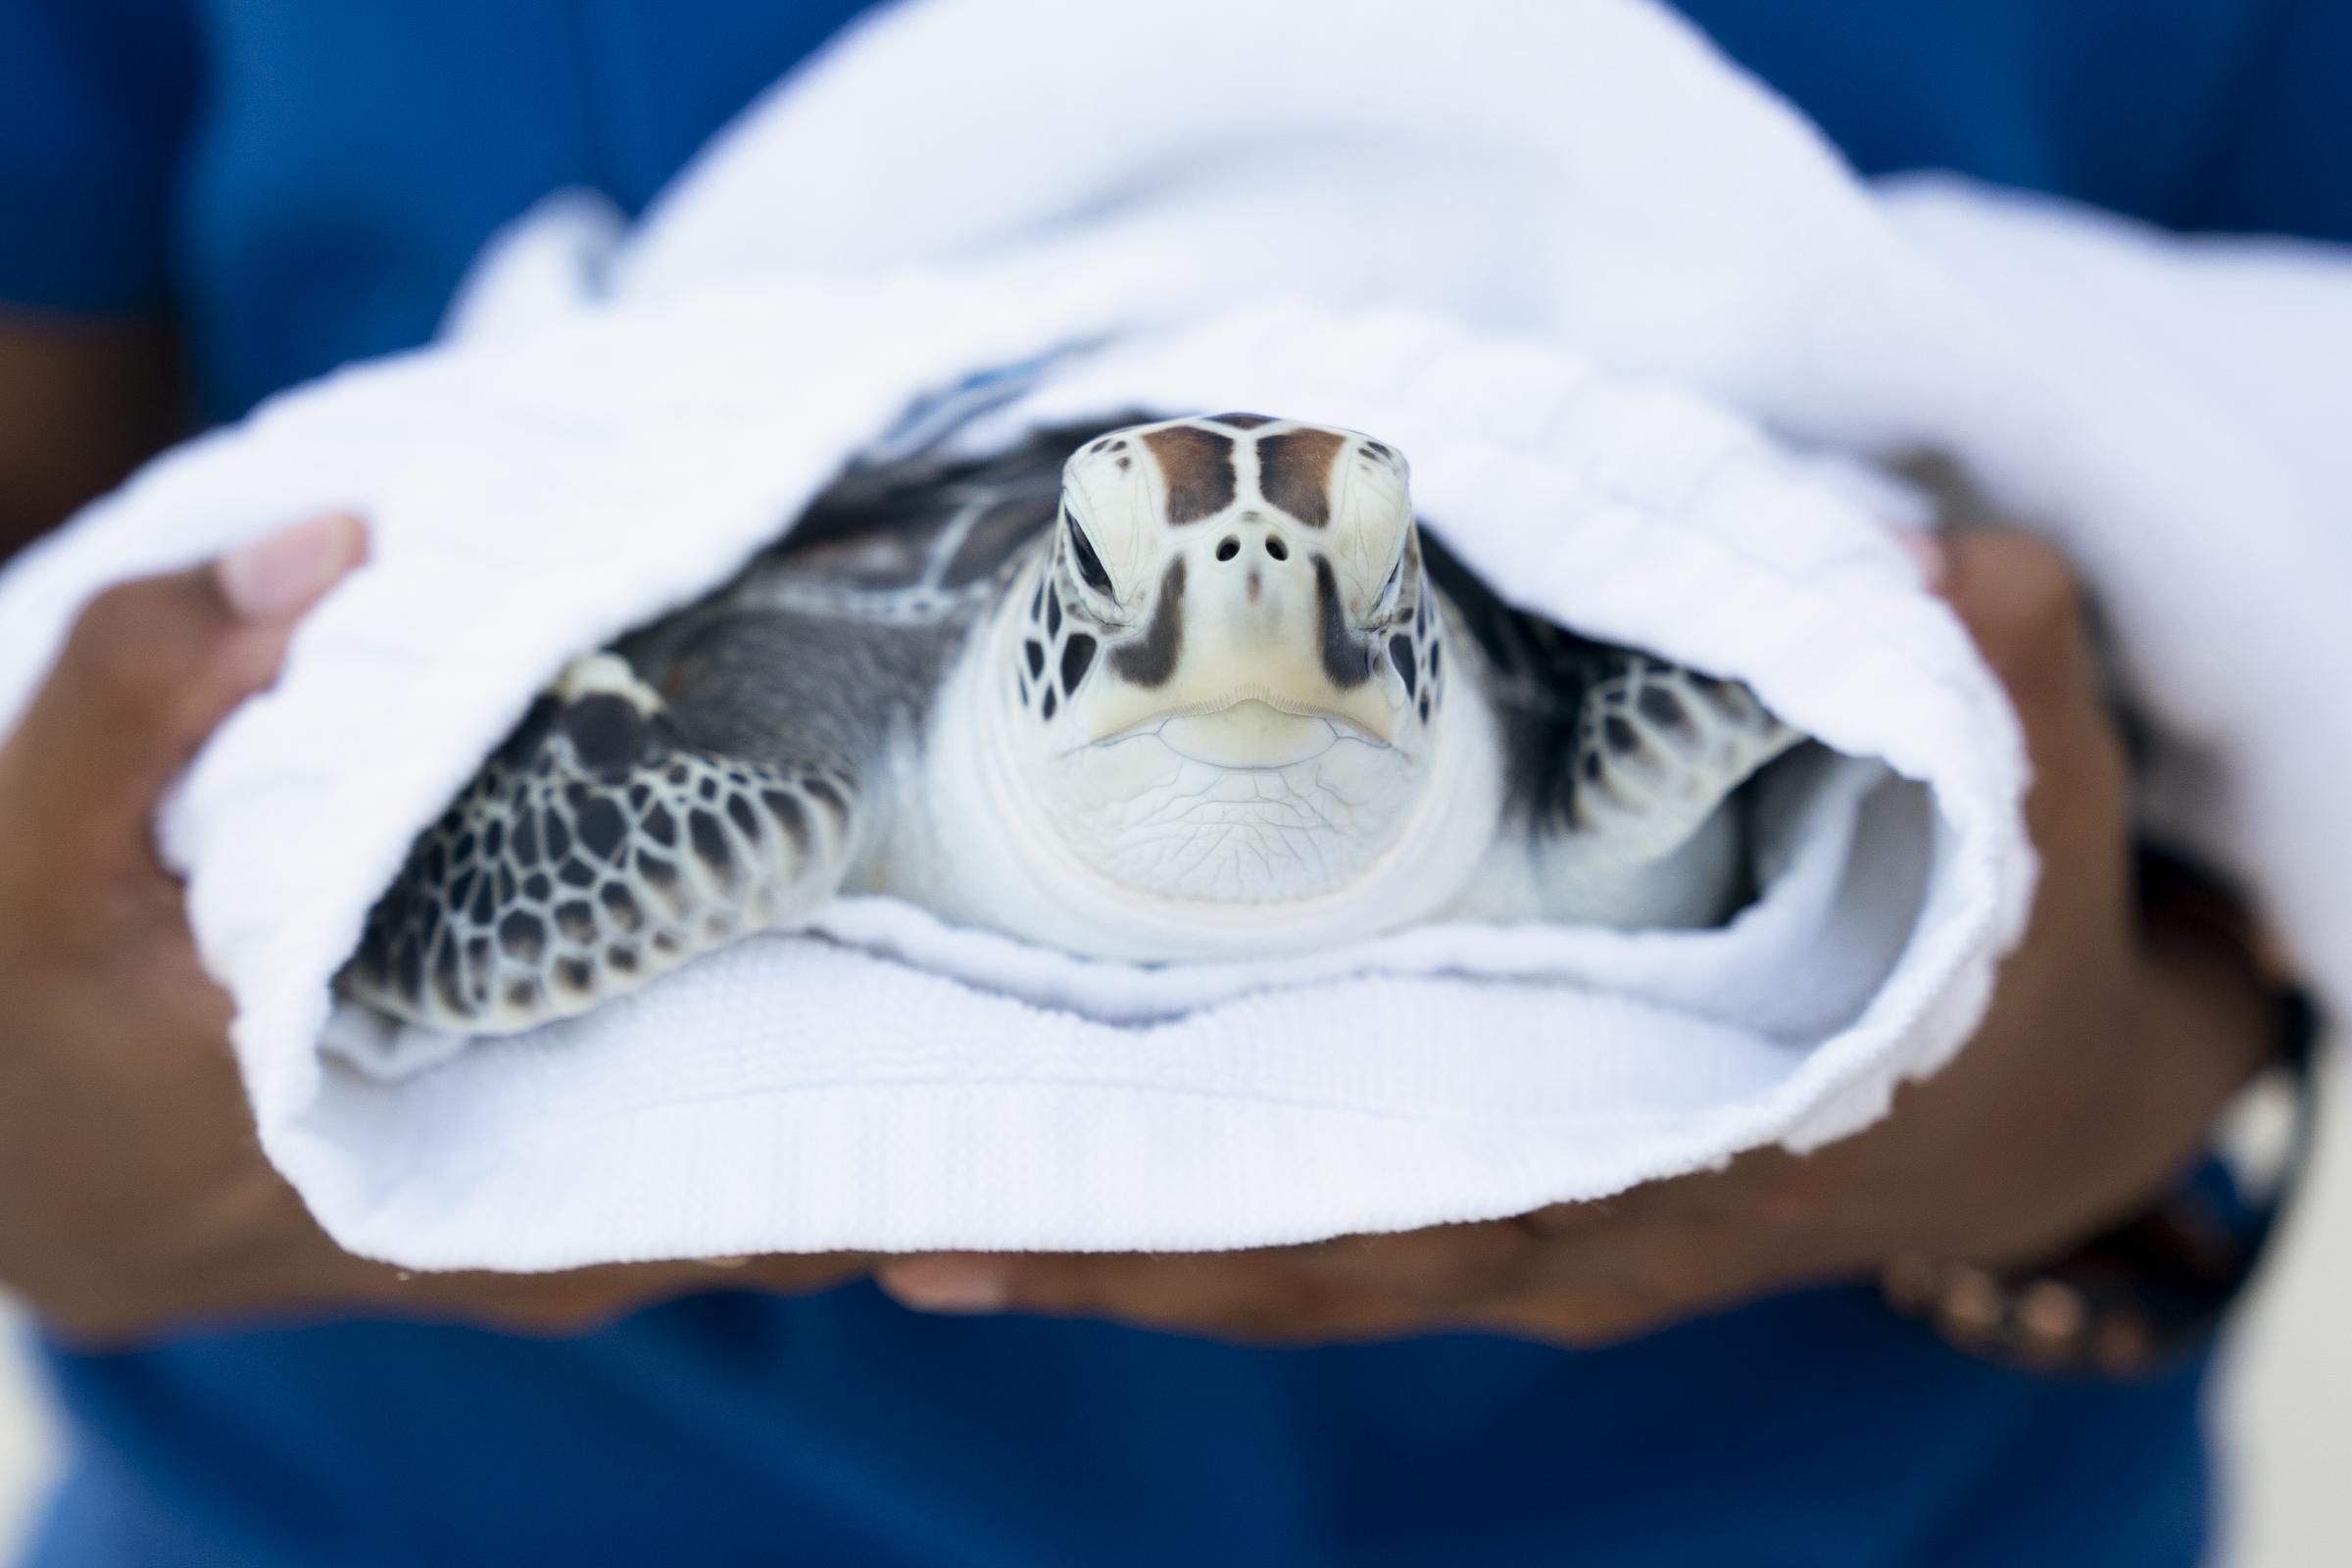 Loch Lomond: Injured sea turtle finds new Scottish home from Maldives